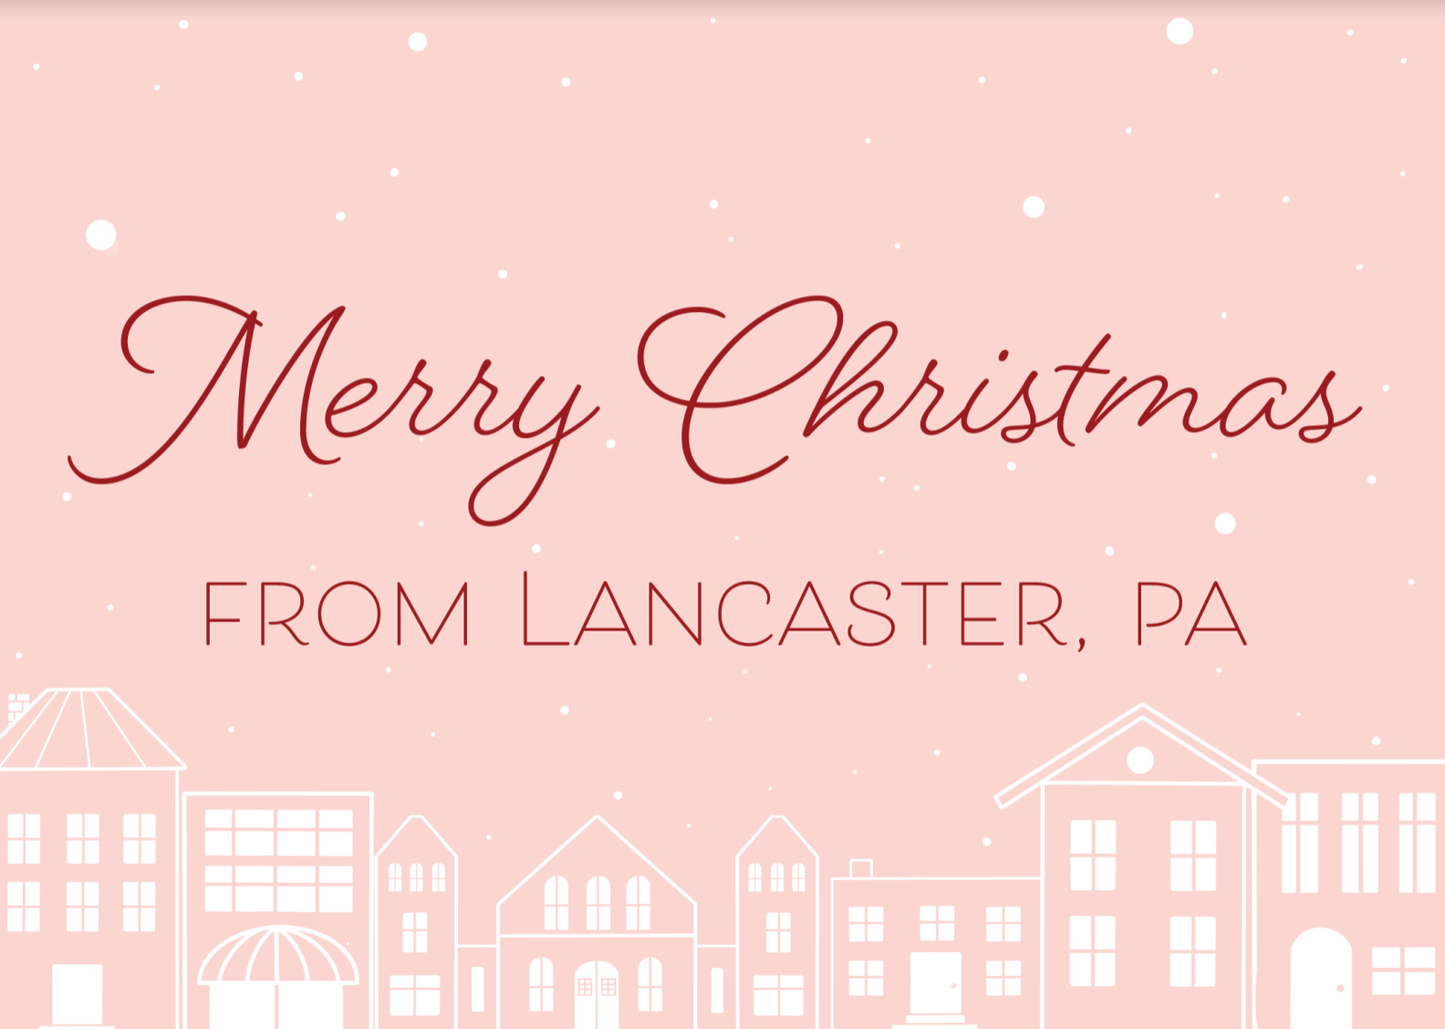 Lancaster Christmas Card - CHYATEE